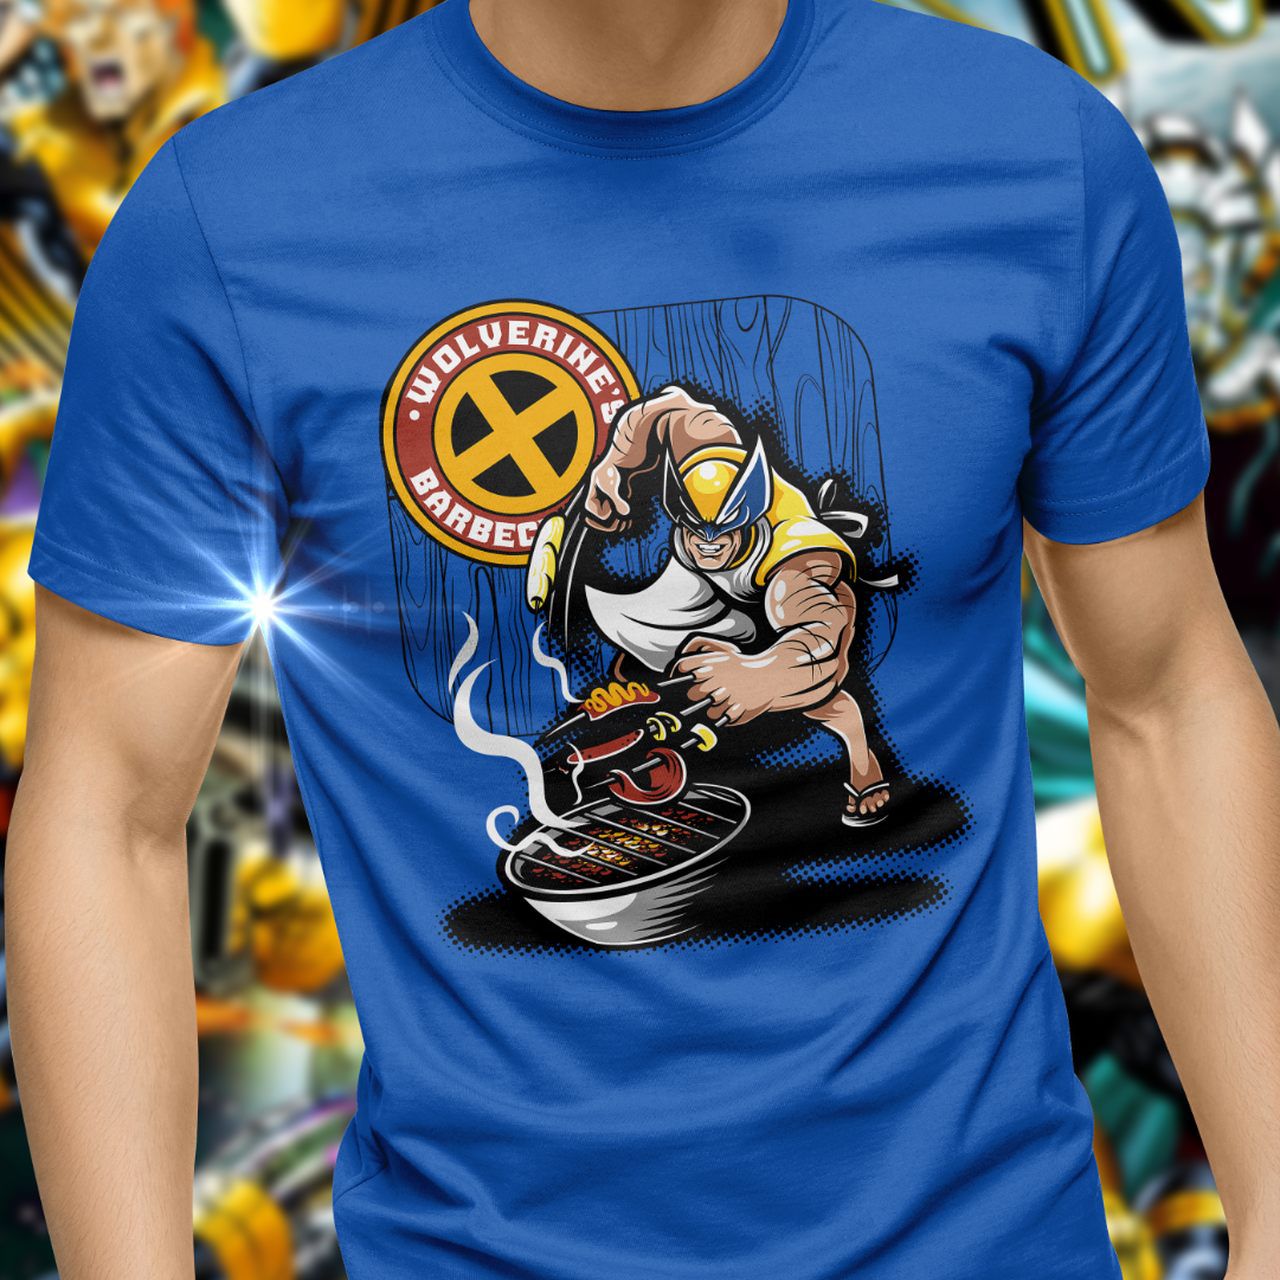 Camiseta Wolverine Barbecue: Marvel - Exclusiva Toyshow